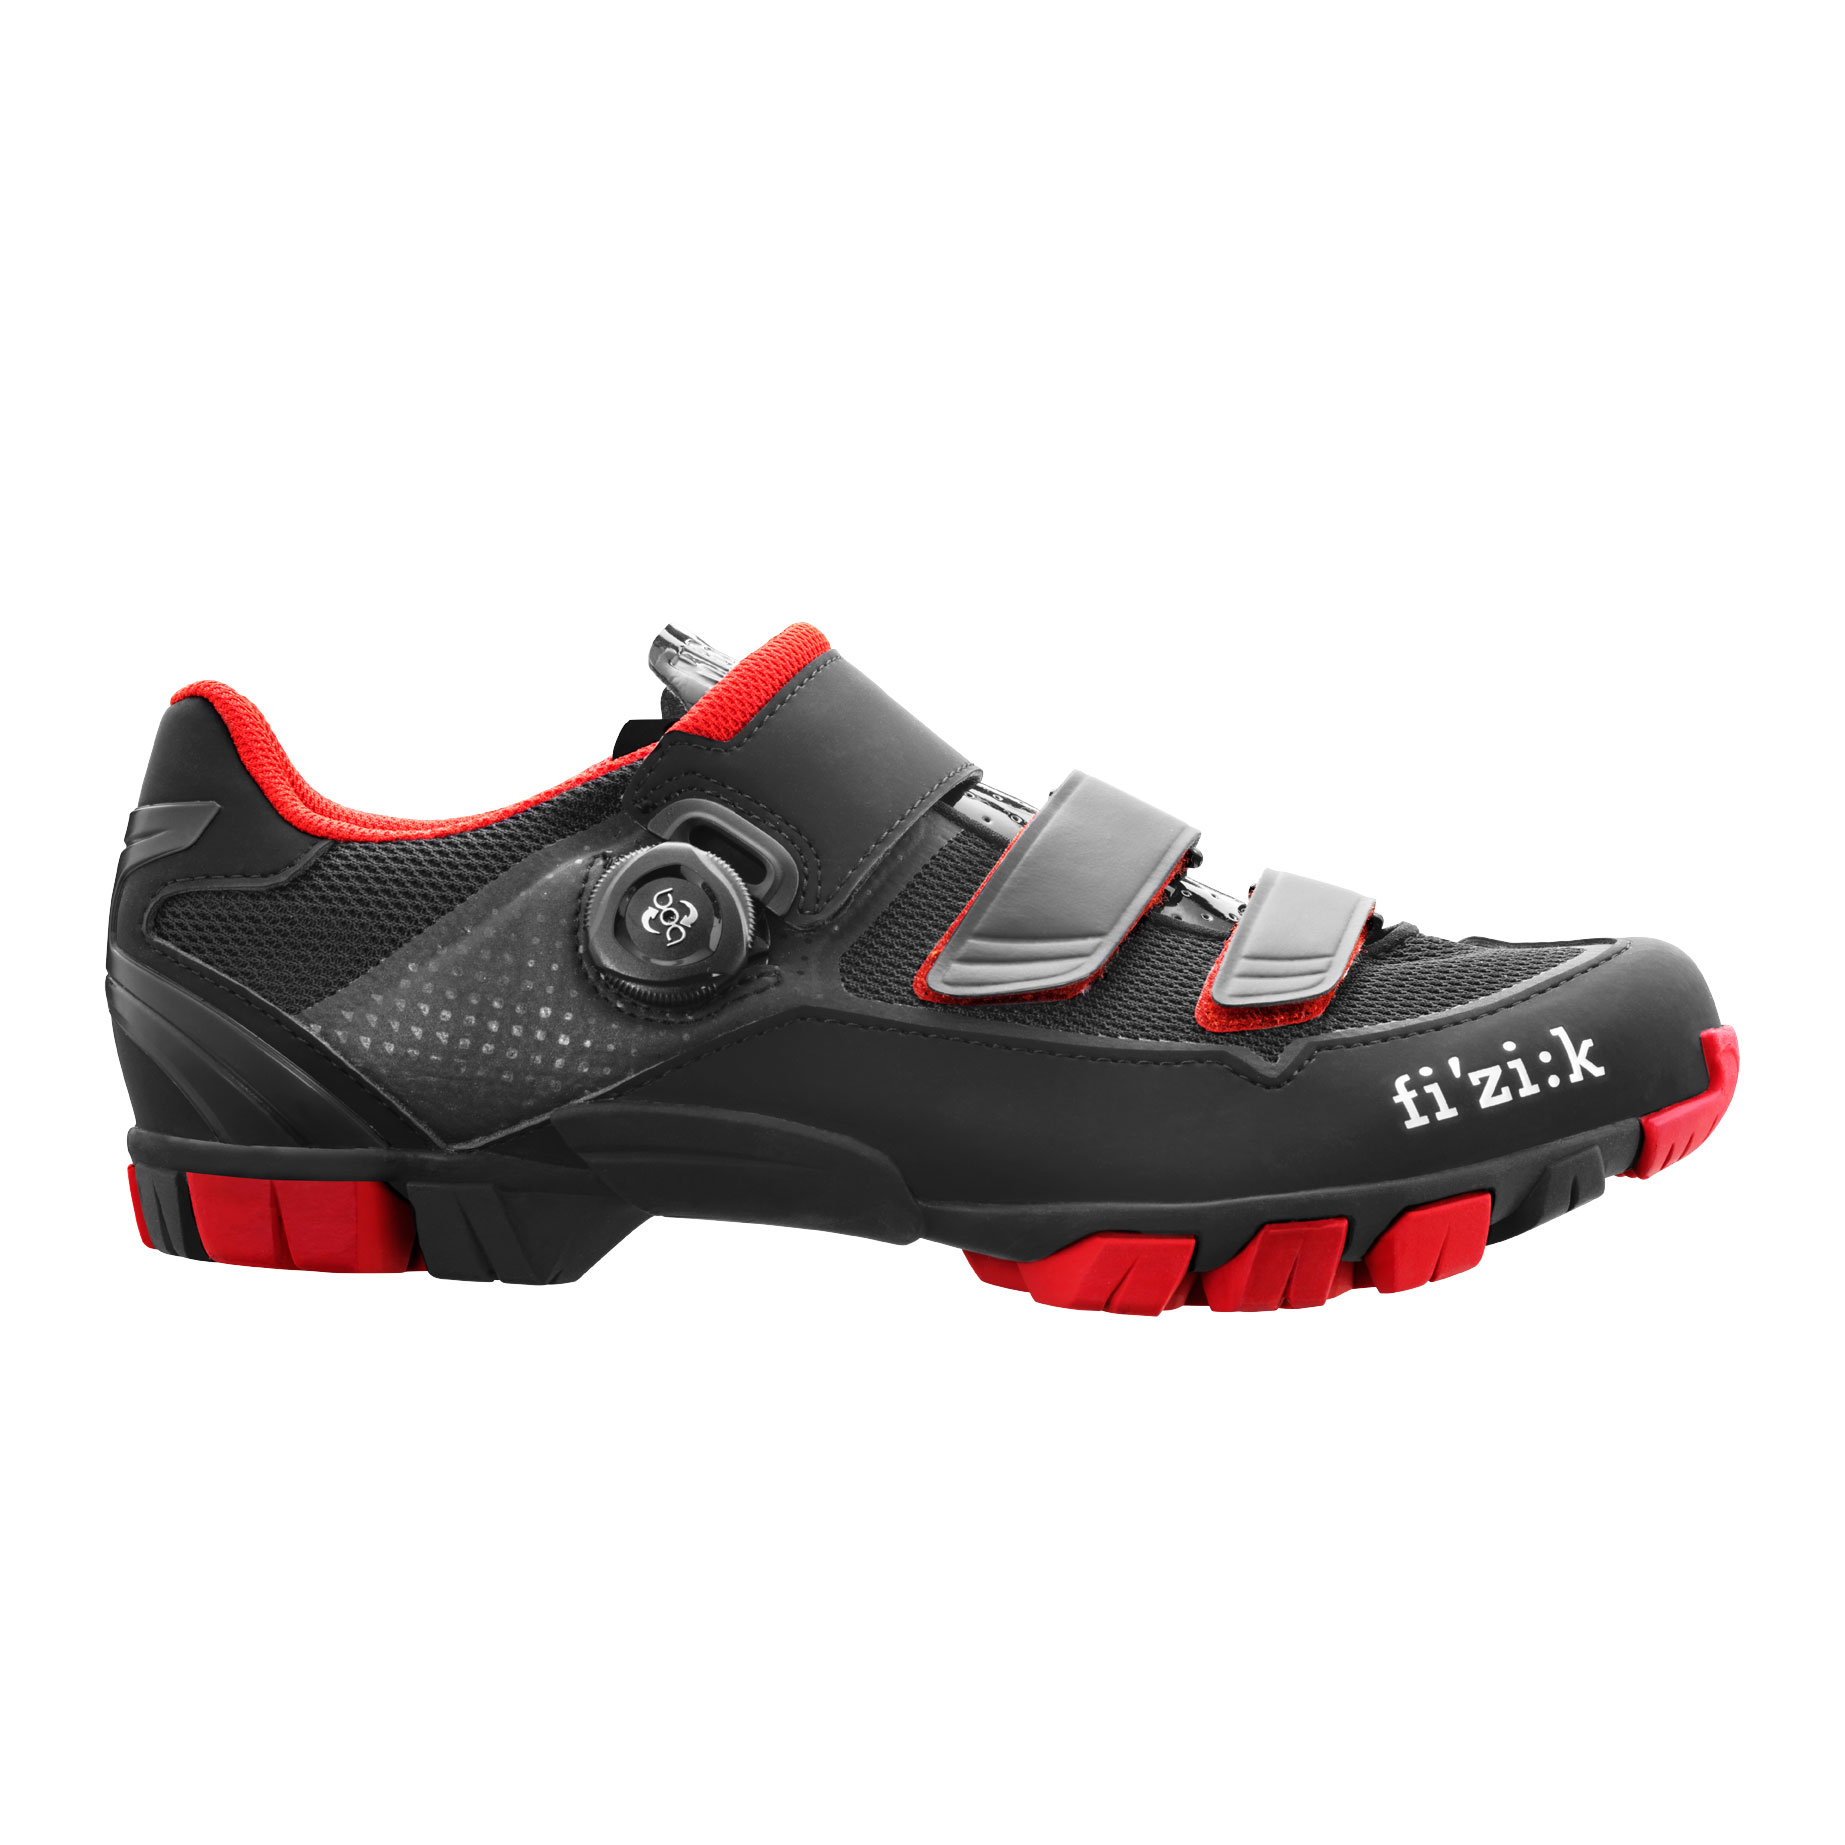 Fizik Men's M6B Uomo BOA MTB Shoes Black Red Size 42 *Damaged Packaging*